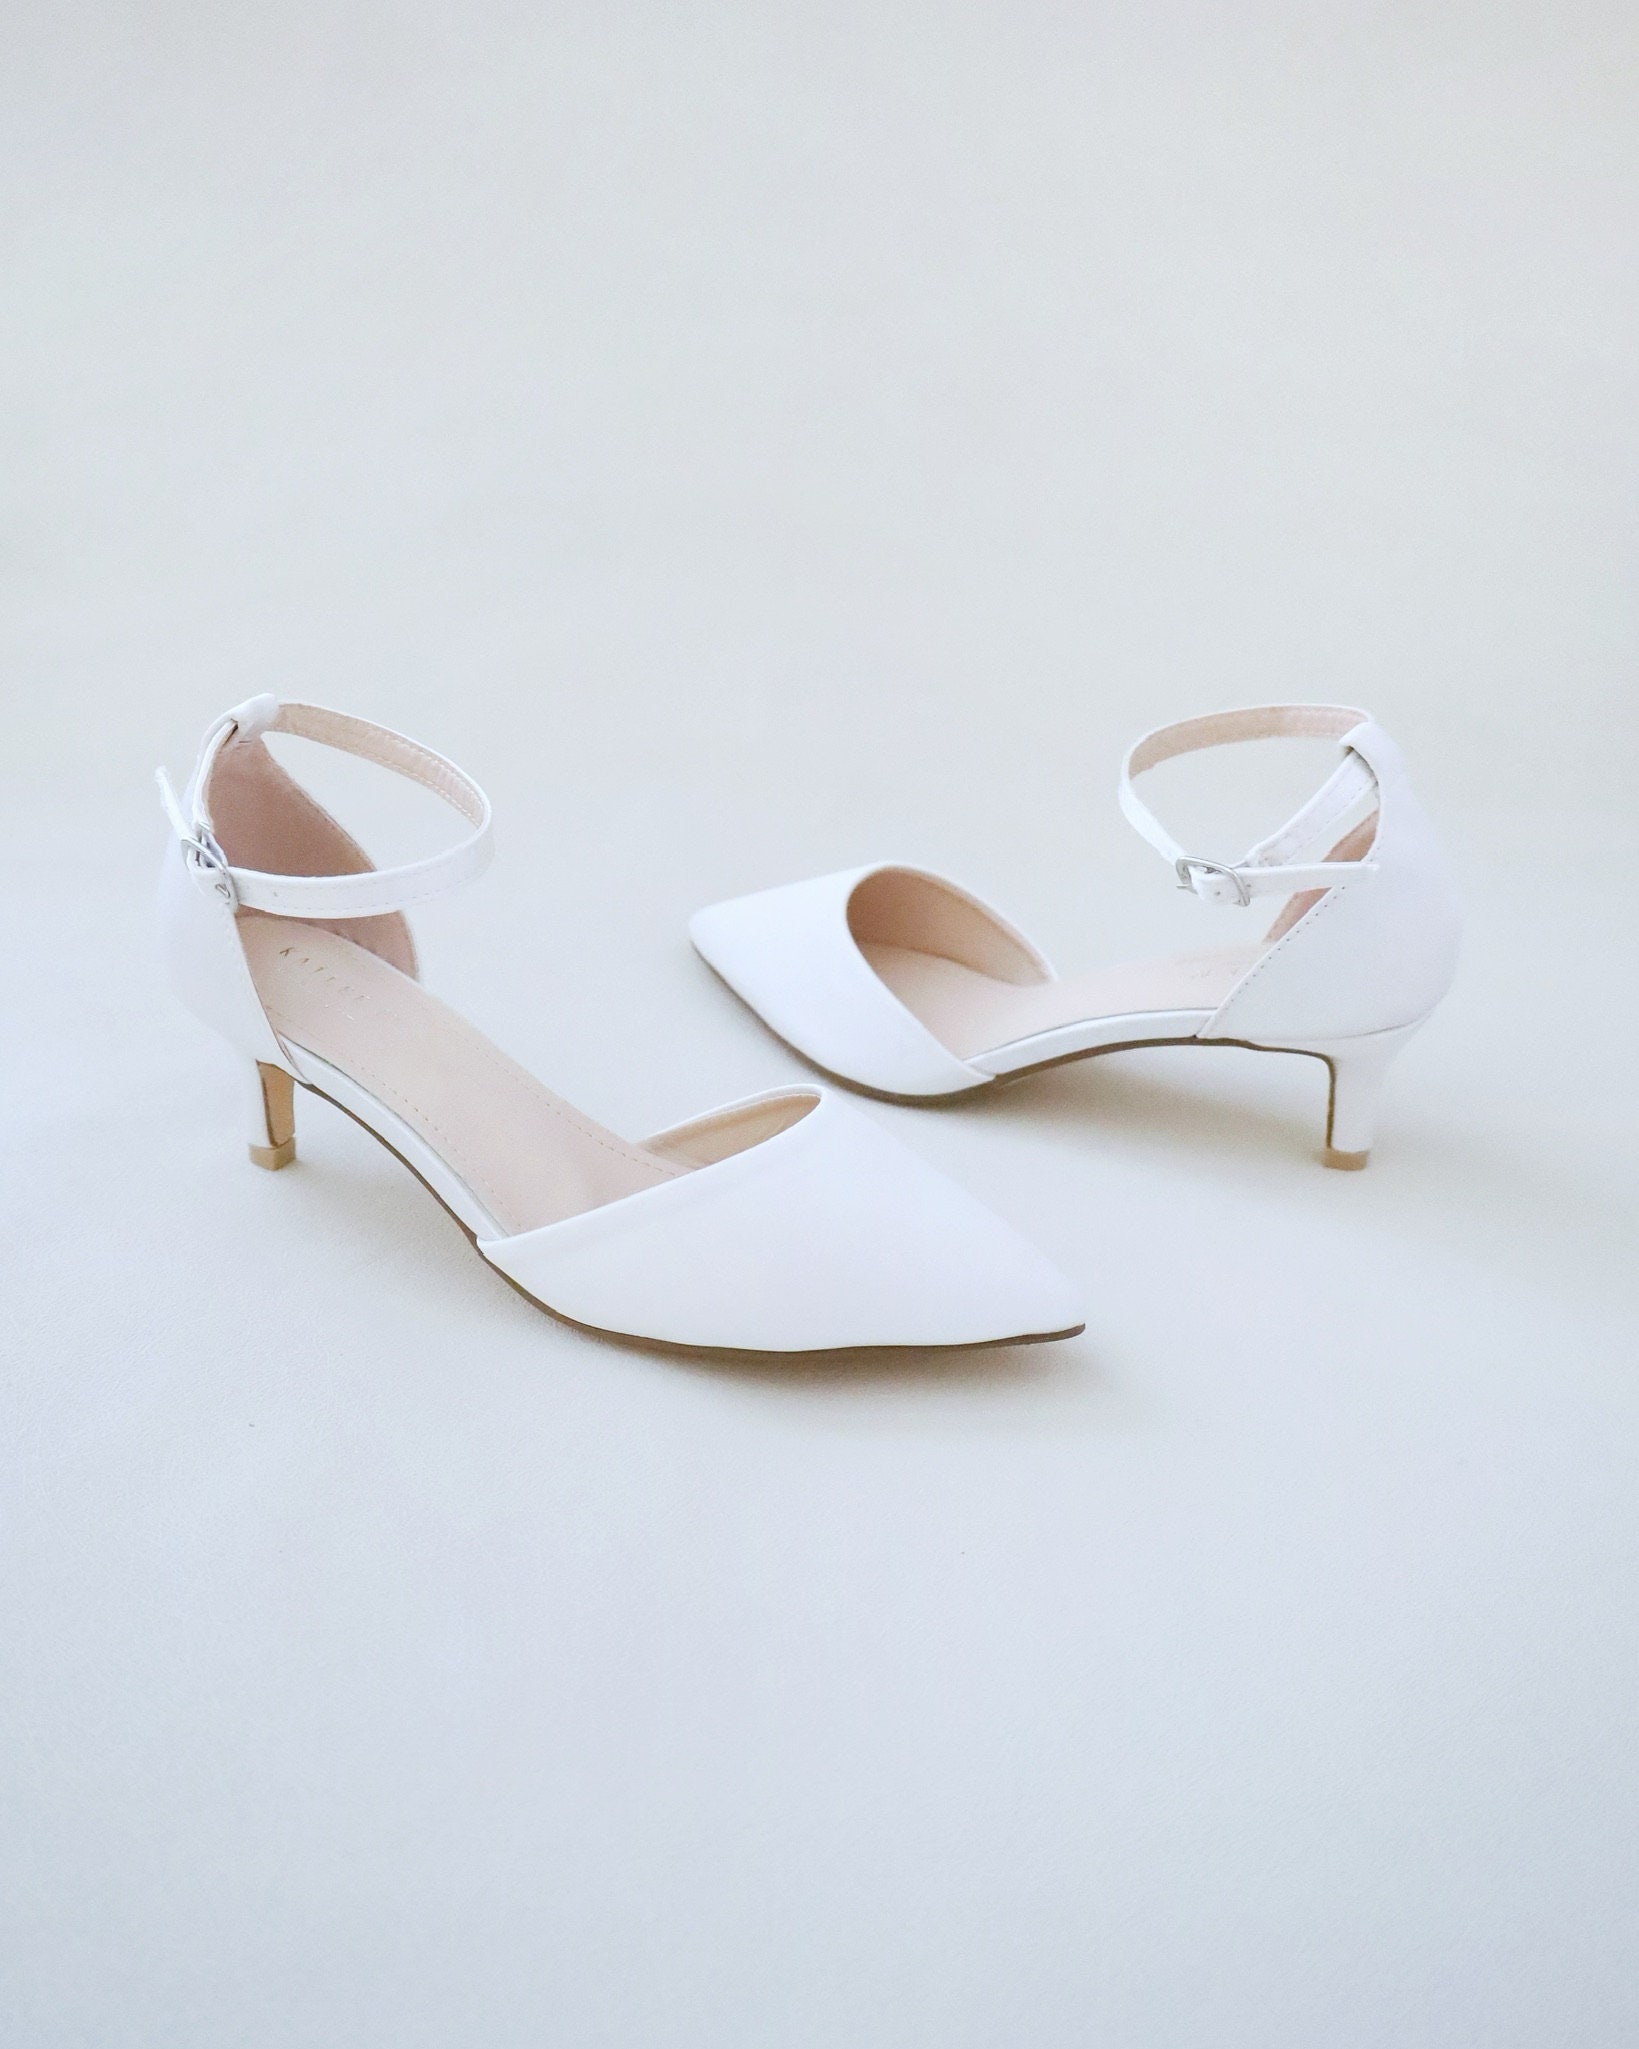 Myday White Satin Heels by Mollini | Shop Online at Mollini